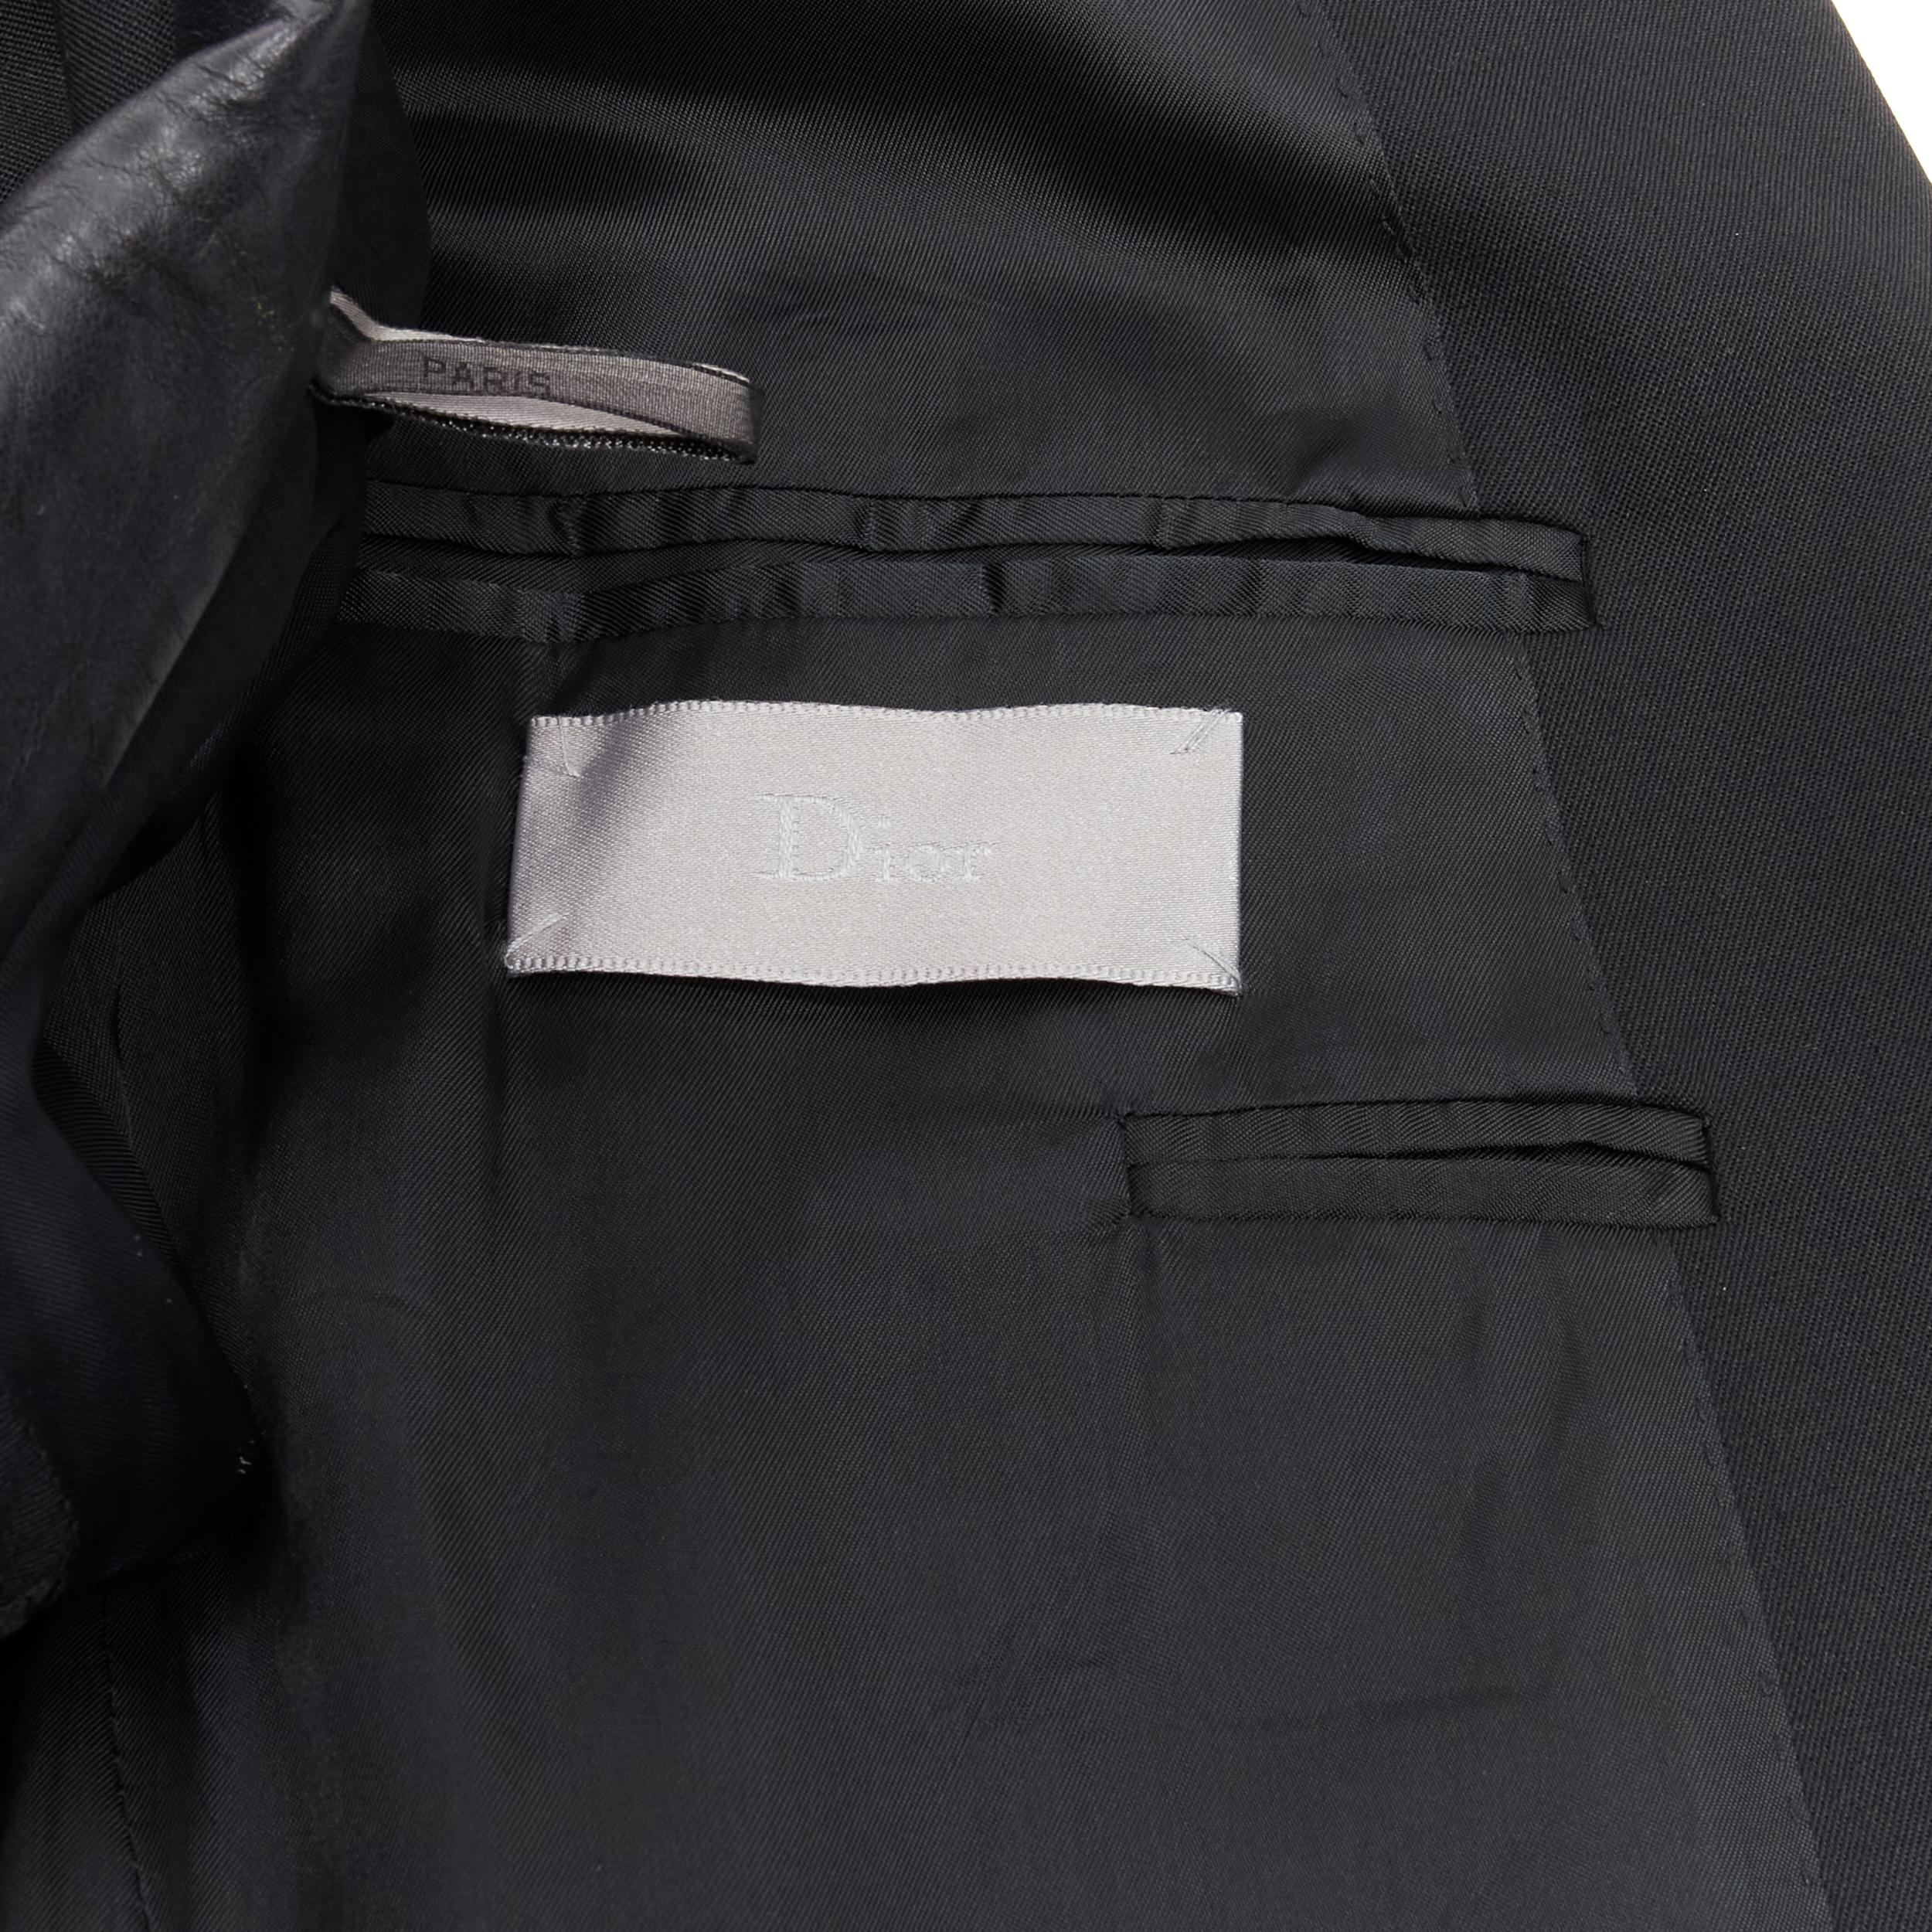 DIOR HOMME Hedi Slimane leather collar classic 2-button blazer jacket FR46 S For Sale 6